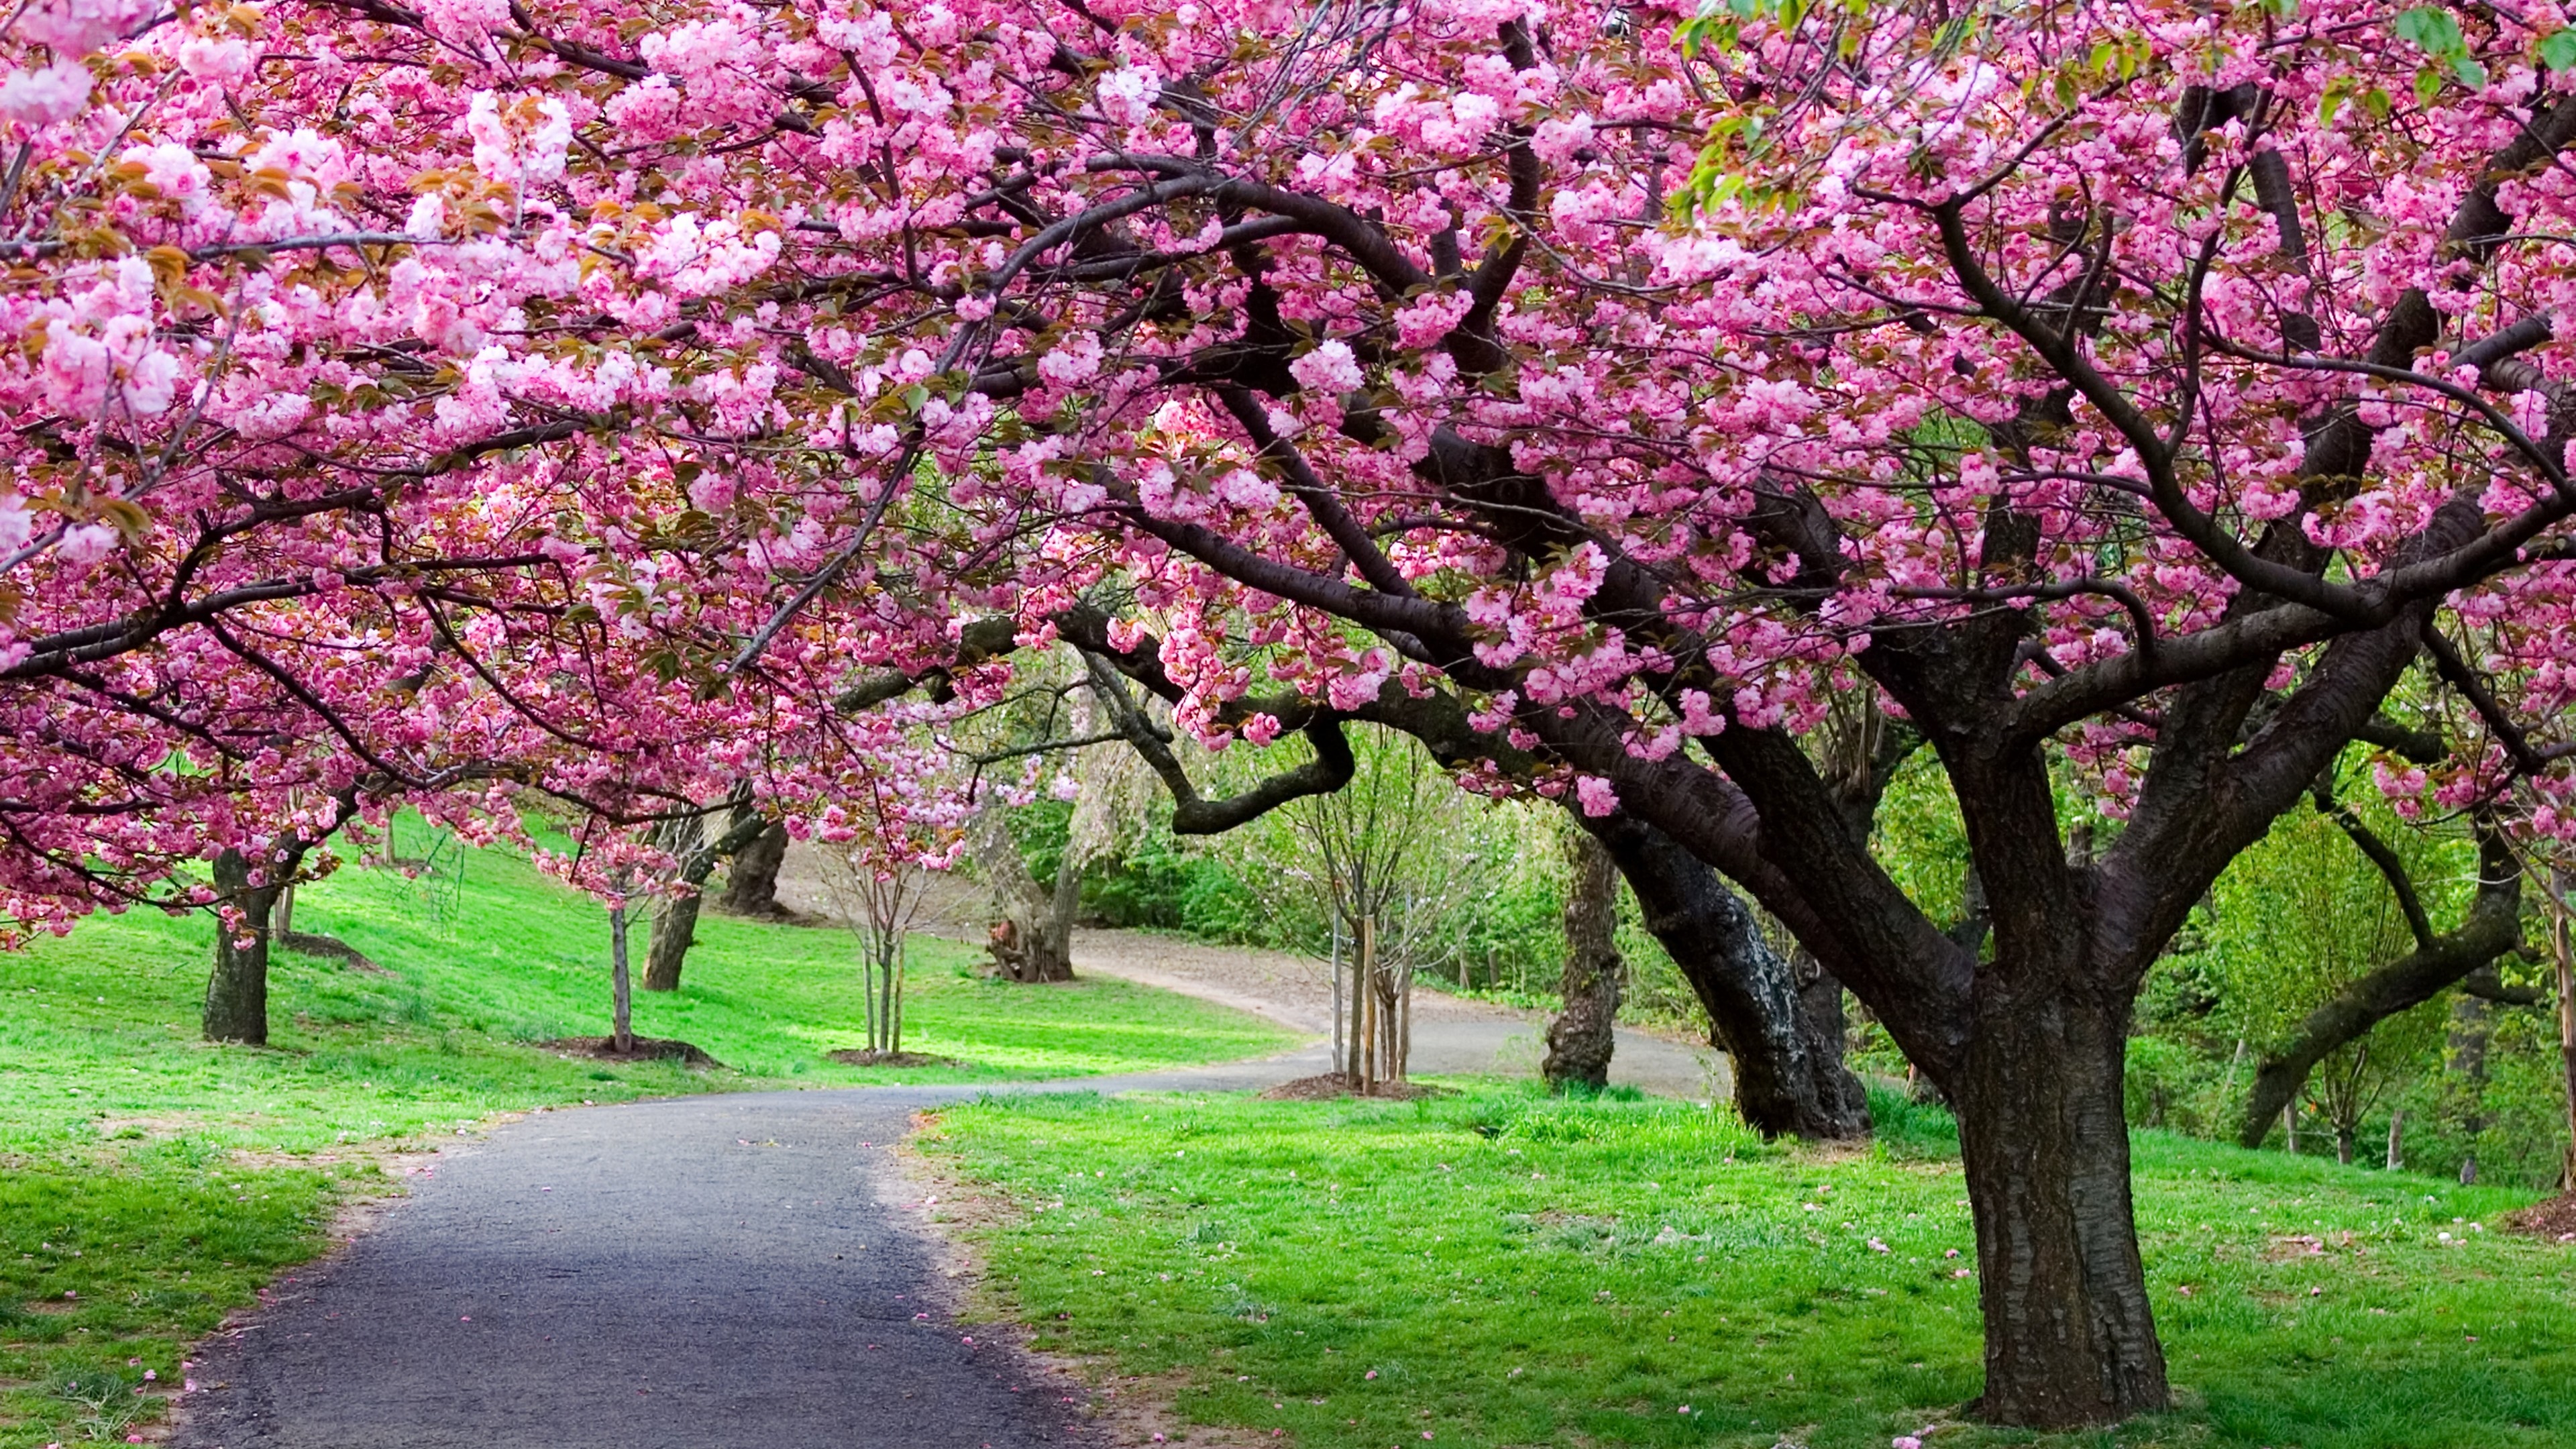 3840x2160 Erde/Natur - Sakura FrÃ¼hling Japan Pfad Park Cherry Blossom Cherry Tree  Wallpaper